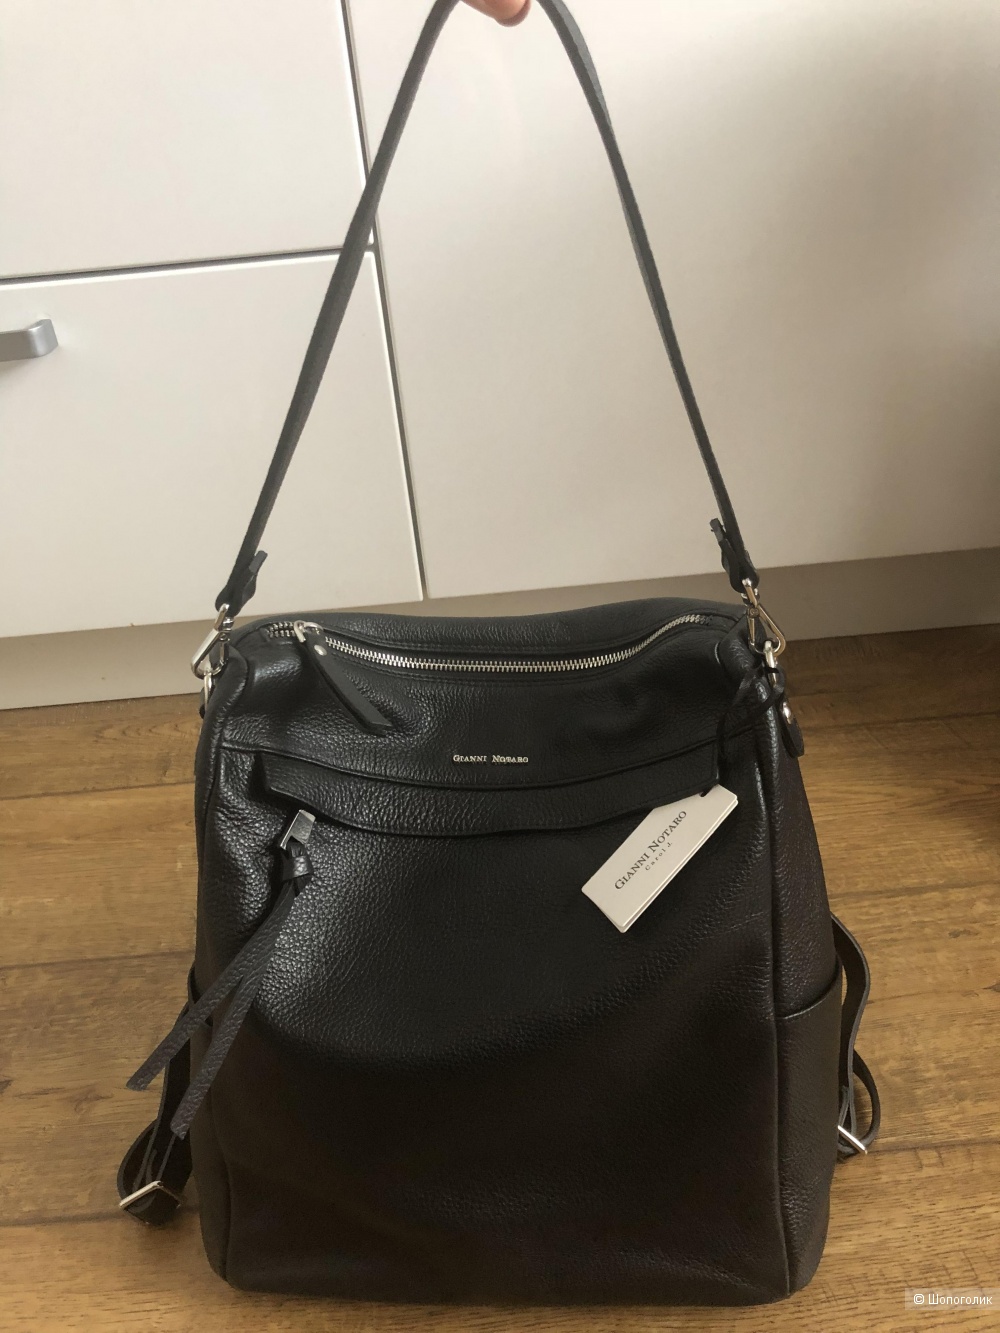 Рюкзак-сумка Gianni Notaro